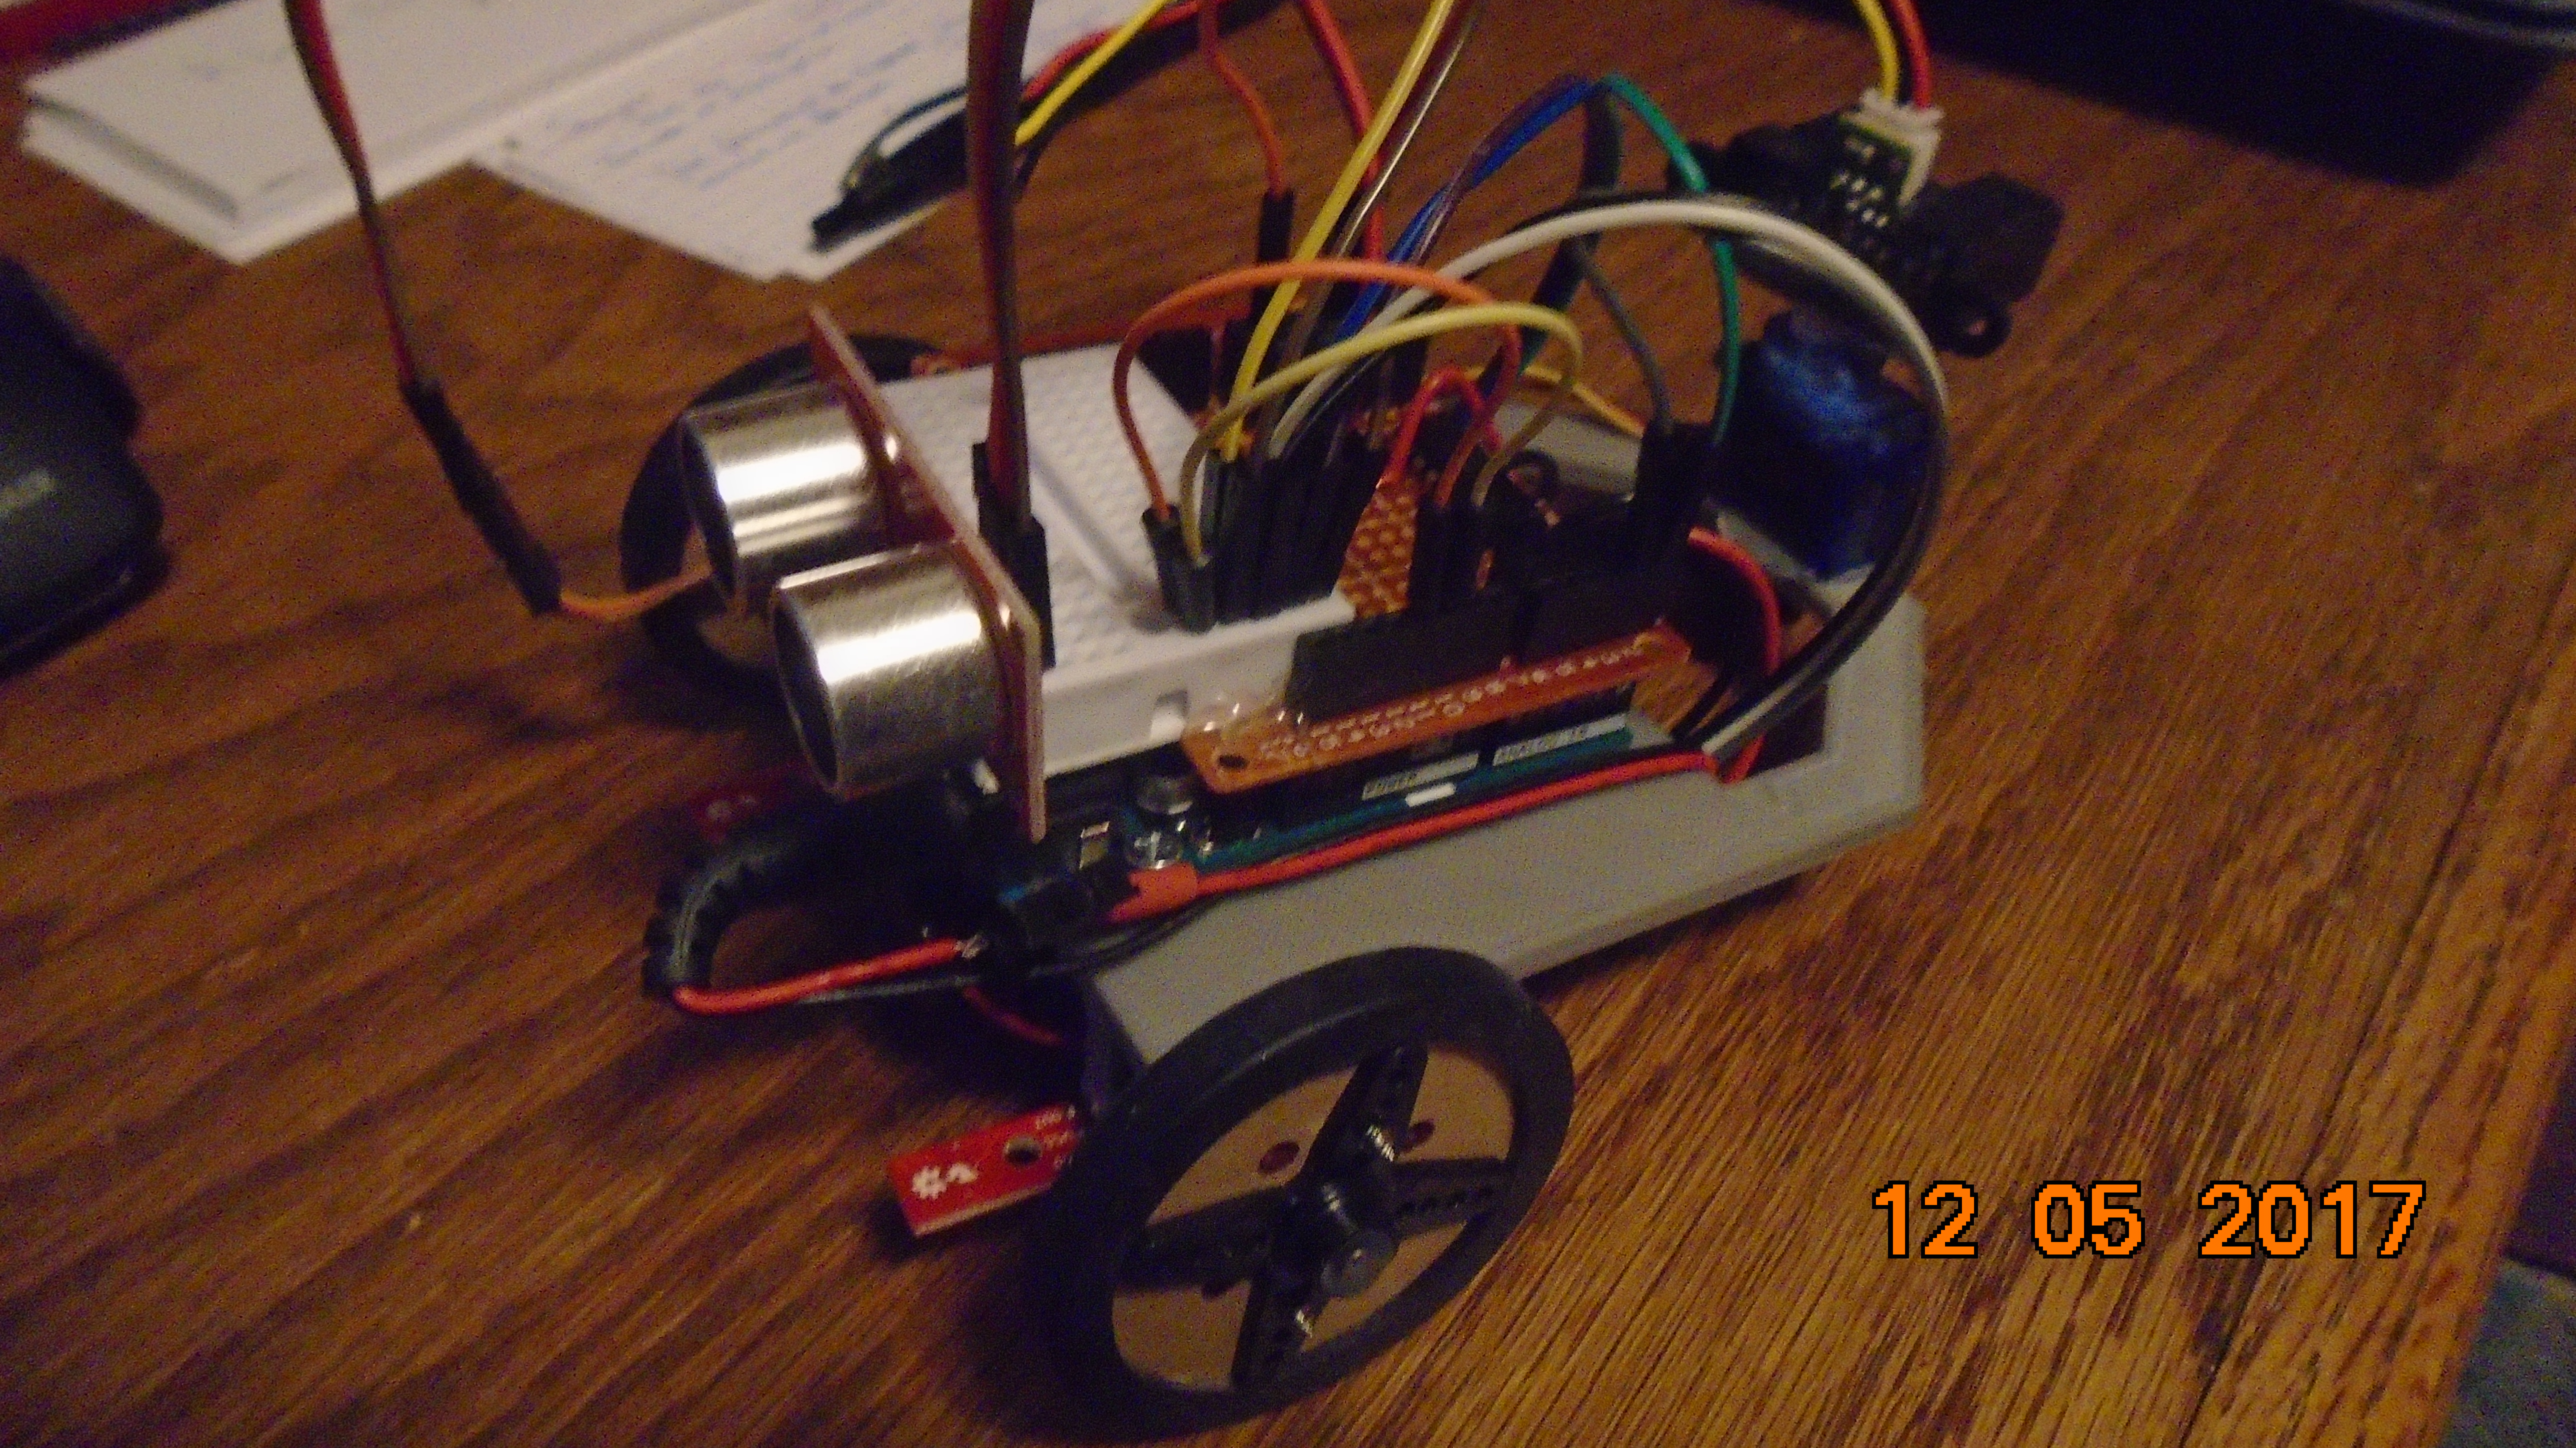 Apollo Robot prototype on 3D printed chassis